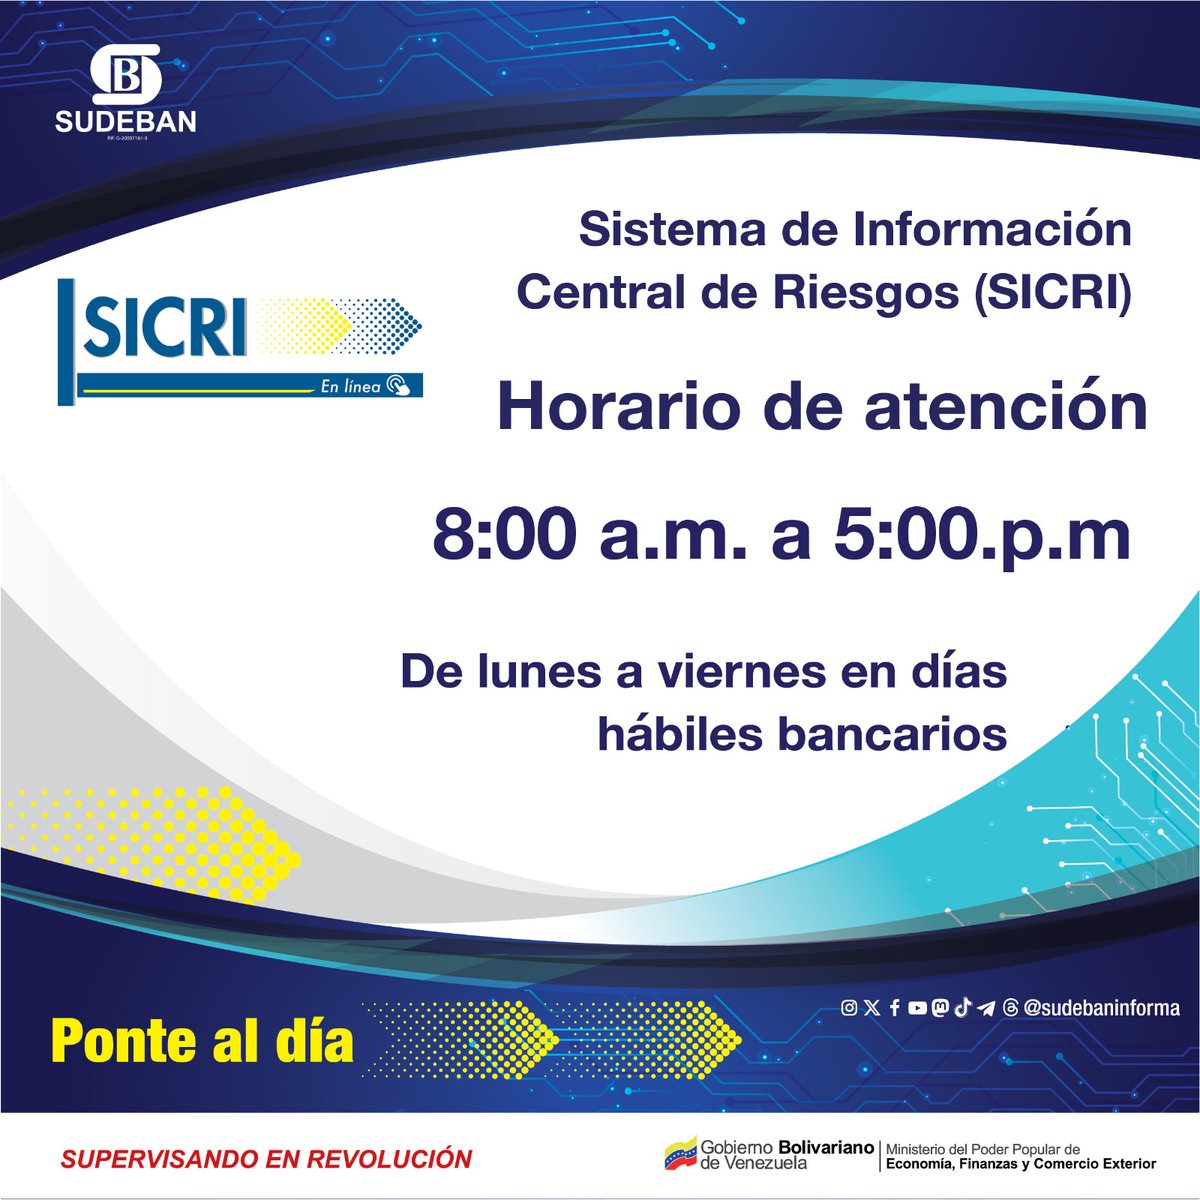 #Entérate || El Sistema de Información Central de Riesgos (SICRI) en línea está activo de Lunes a Viernes de 08:00 a.m a 05:00 p.m en los días hábiles bancarios. #Sudeban #SICRI #SupervisandoEnRevolución #LaEsperanzaEstáEnLaCalle